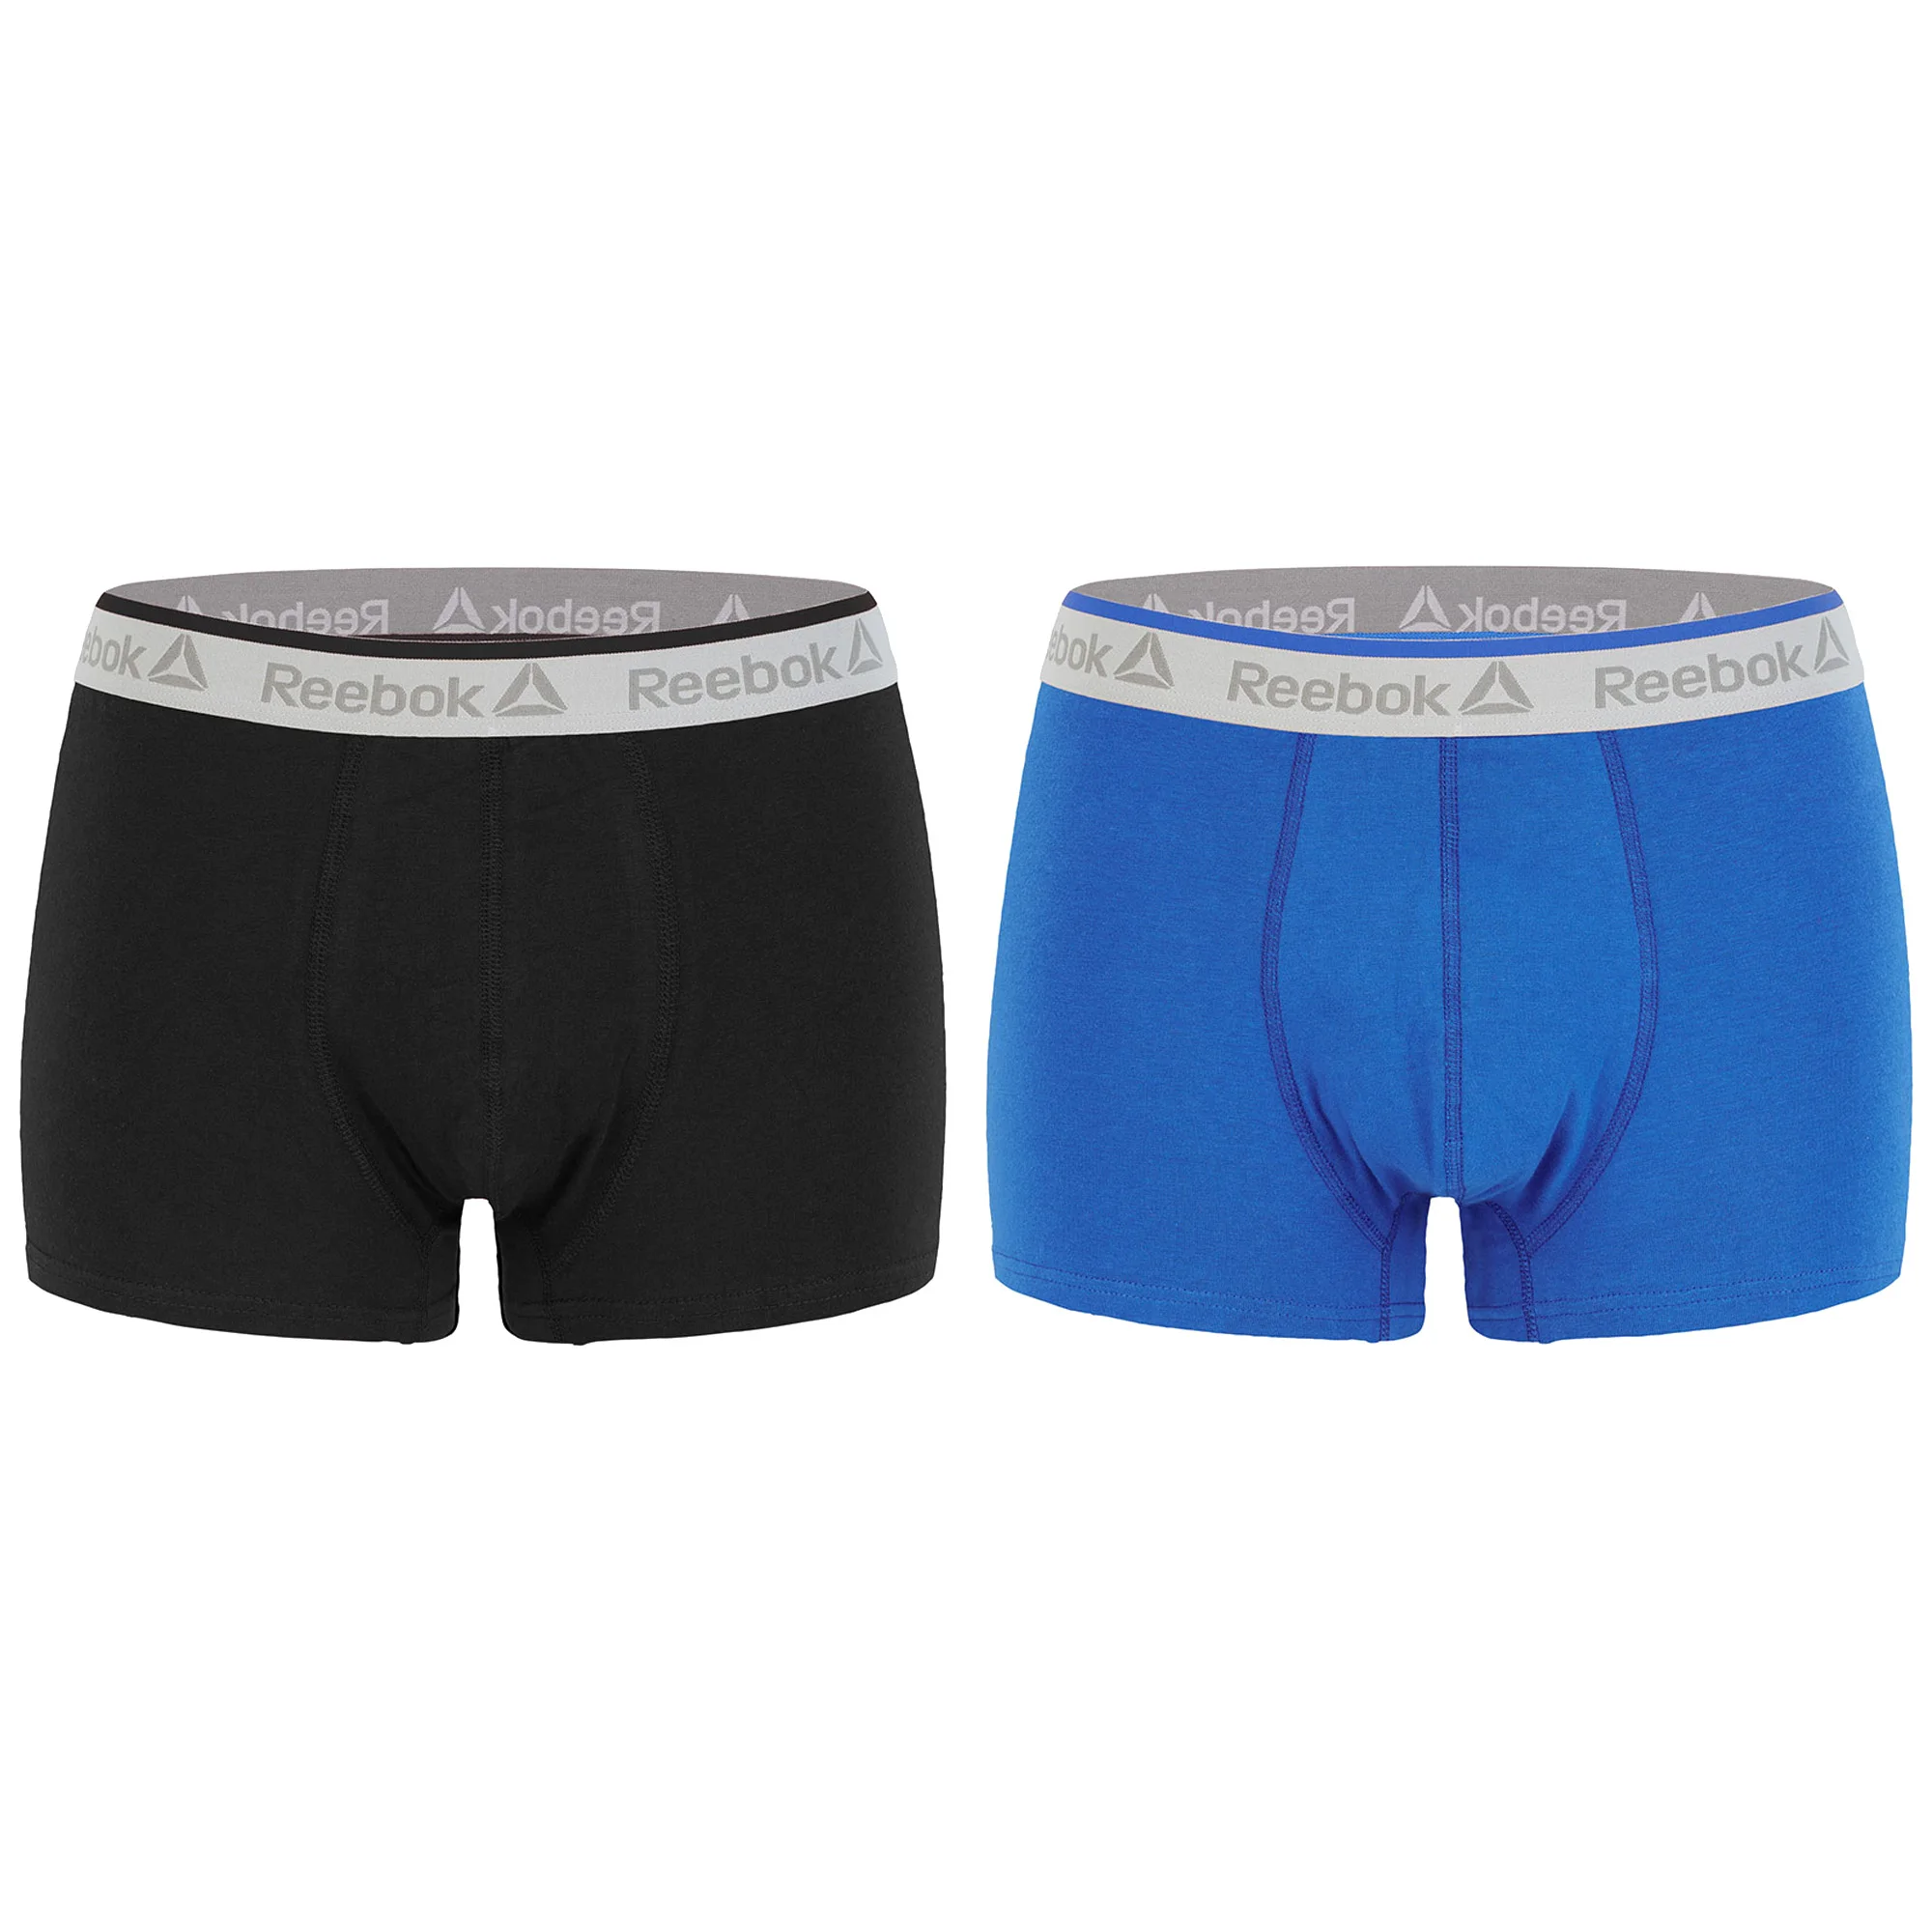 REEBOK boxers pack 2 pieces of various combinations for men - AliExpress  Underwear & Sleepwears